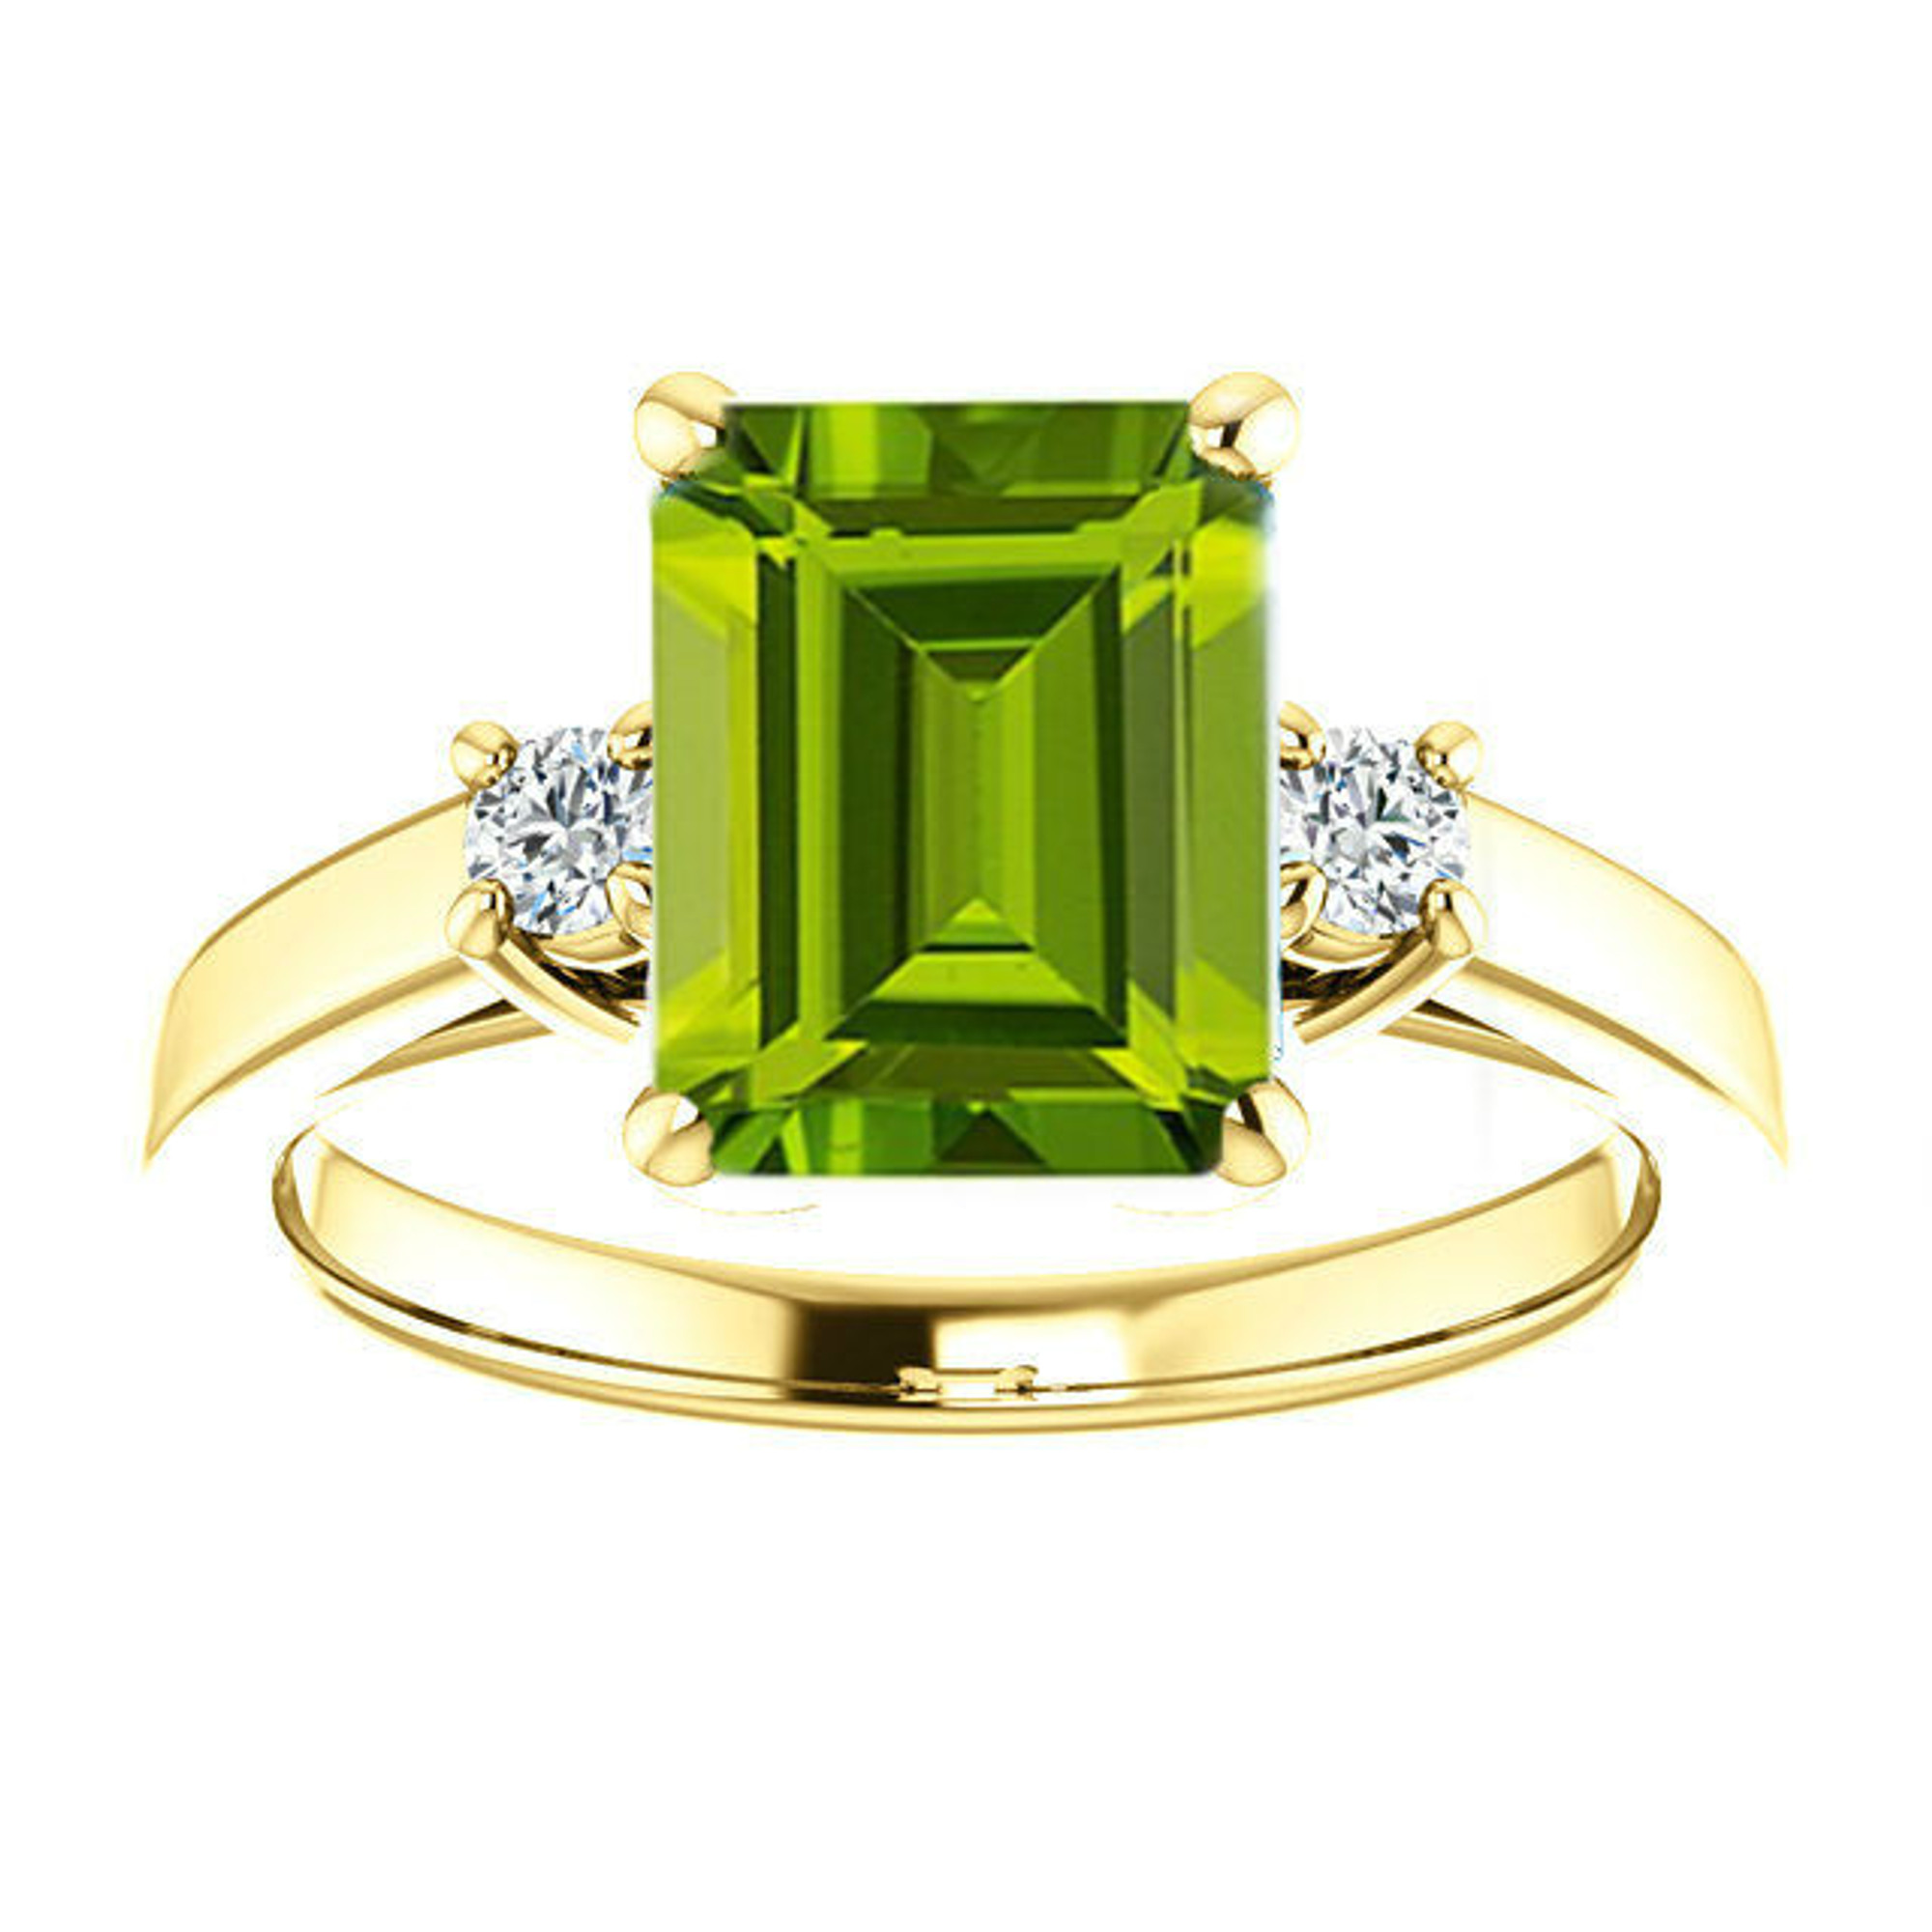 Buy Peridot Ring Online at Best Price | GemPundit